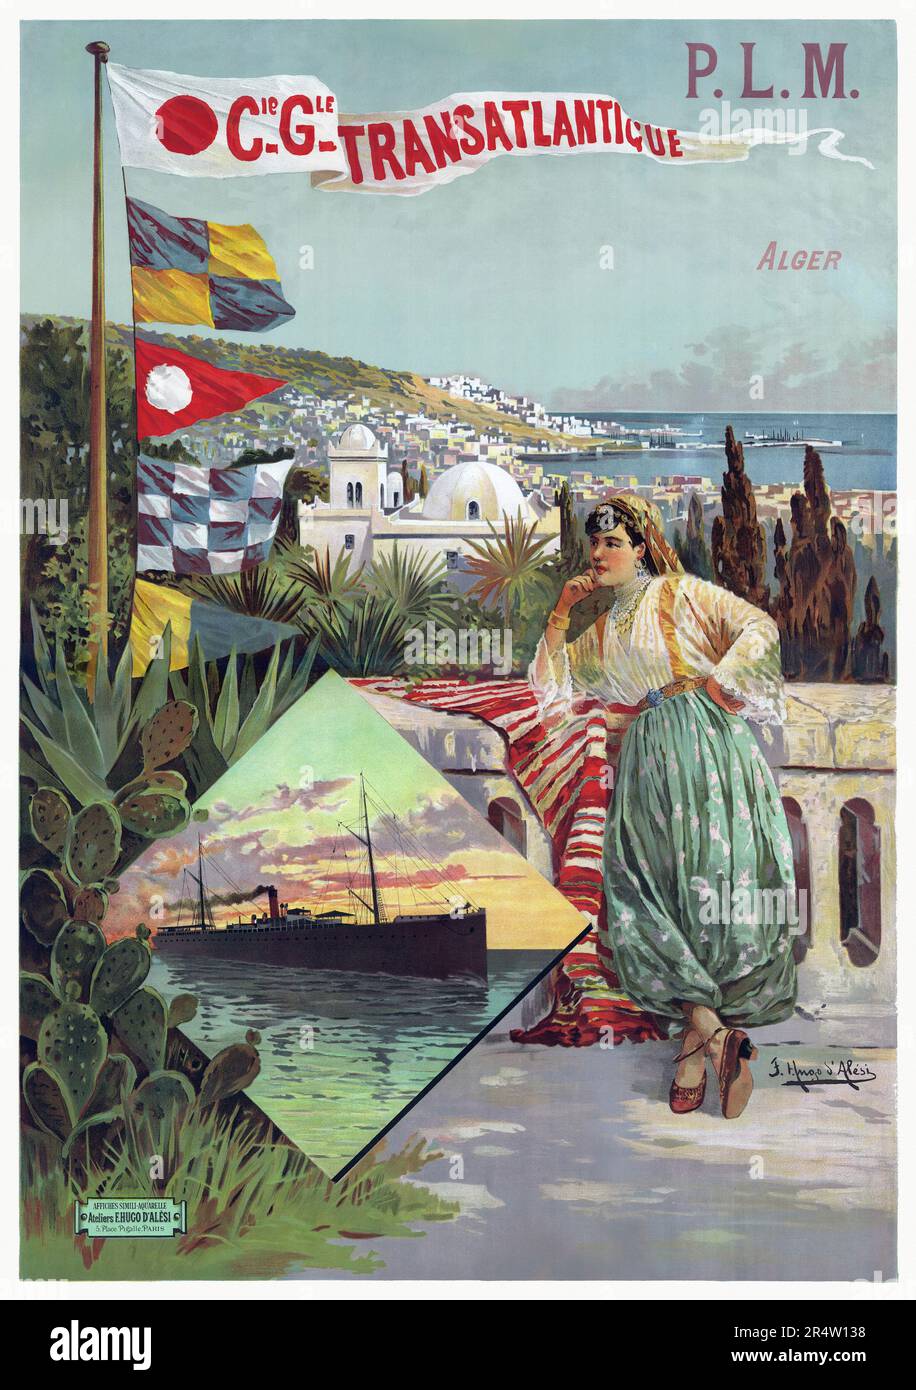 P.L.M., Cie Gle Transatlantique. Alger by F. Hugo d'Alesi (1849-1906). Poster published in 1898 in France. Stock Photo